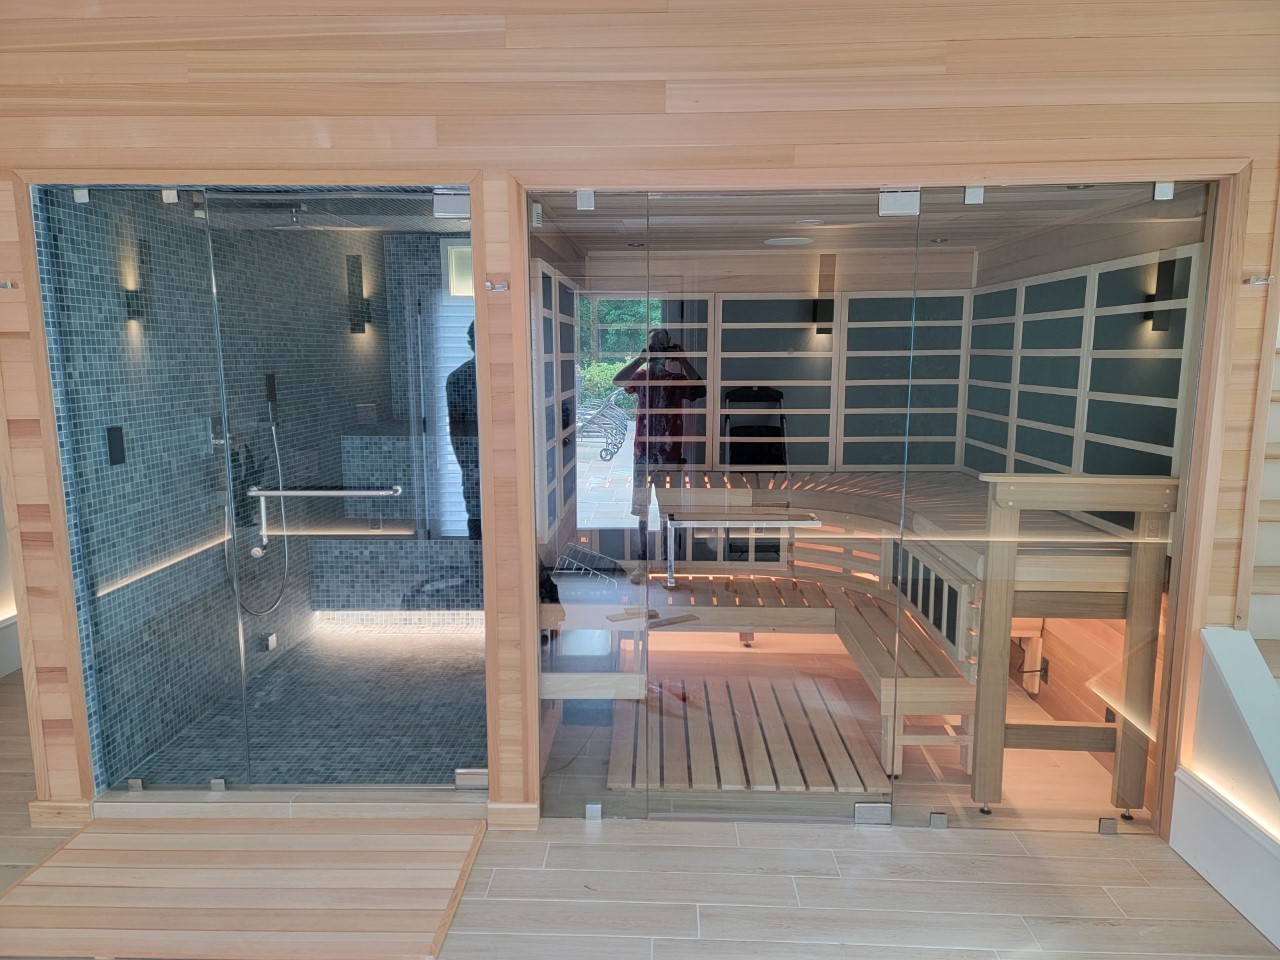 Glass Shower Area And Sauna Area